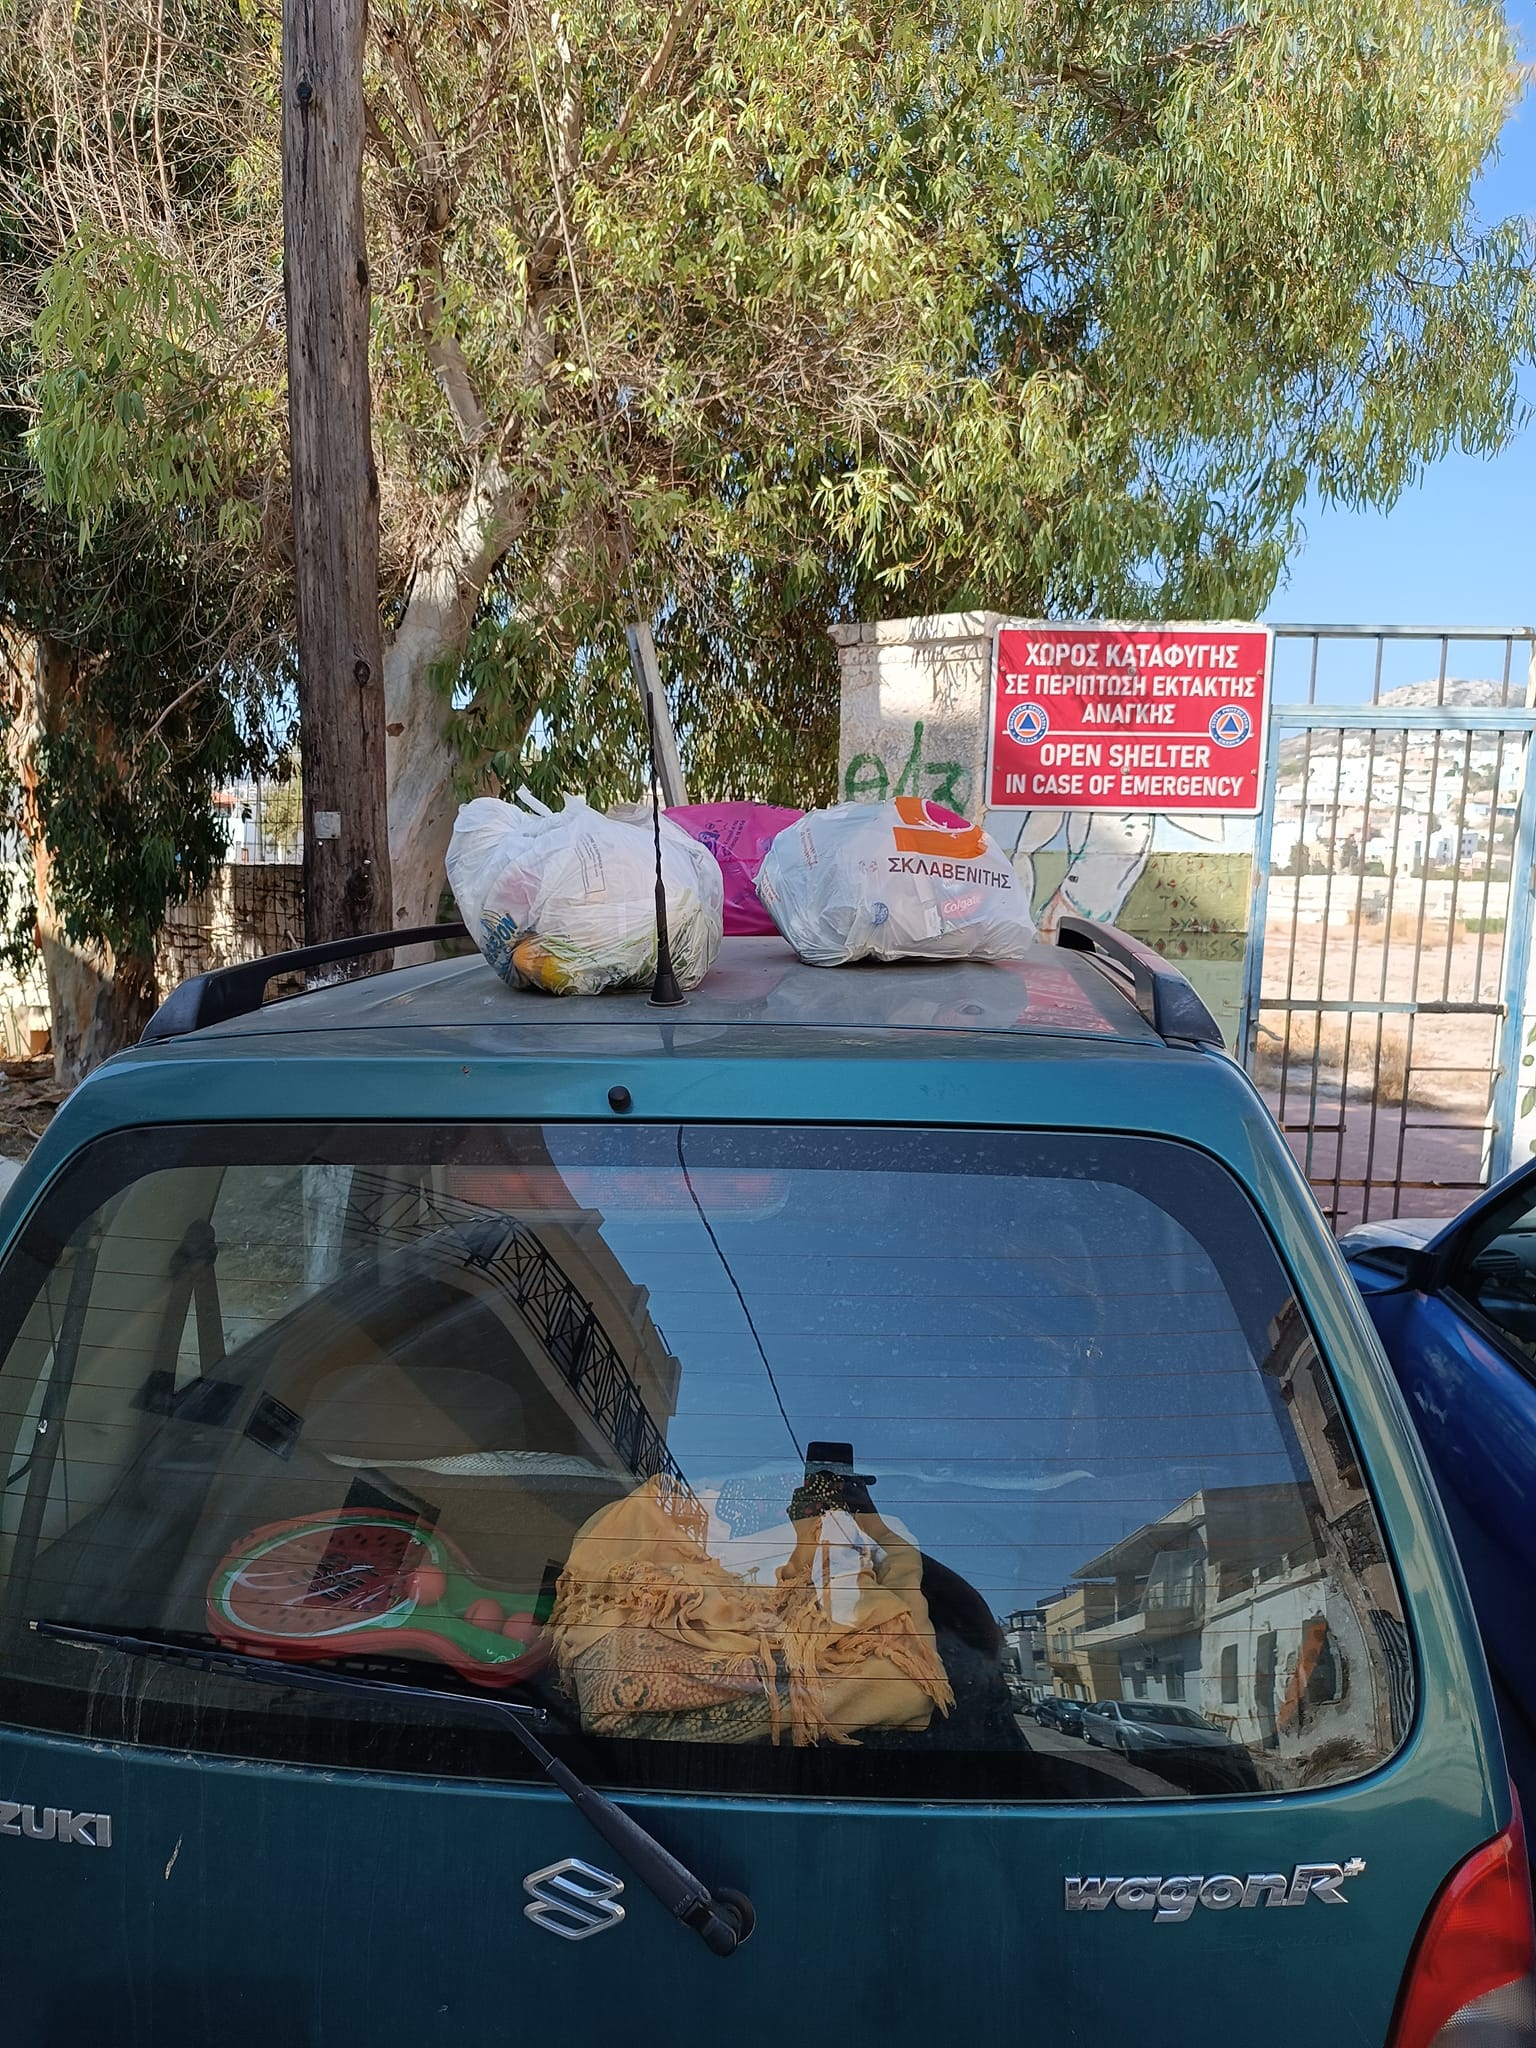 amaksi skoupidia - Σύρος: Αντί για κλήση, του πέταξαν σκουπίδια στο αυτοκίνητο